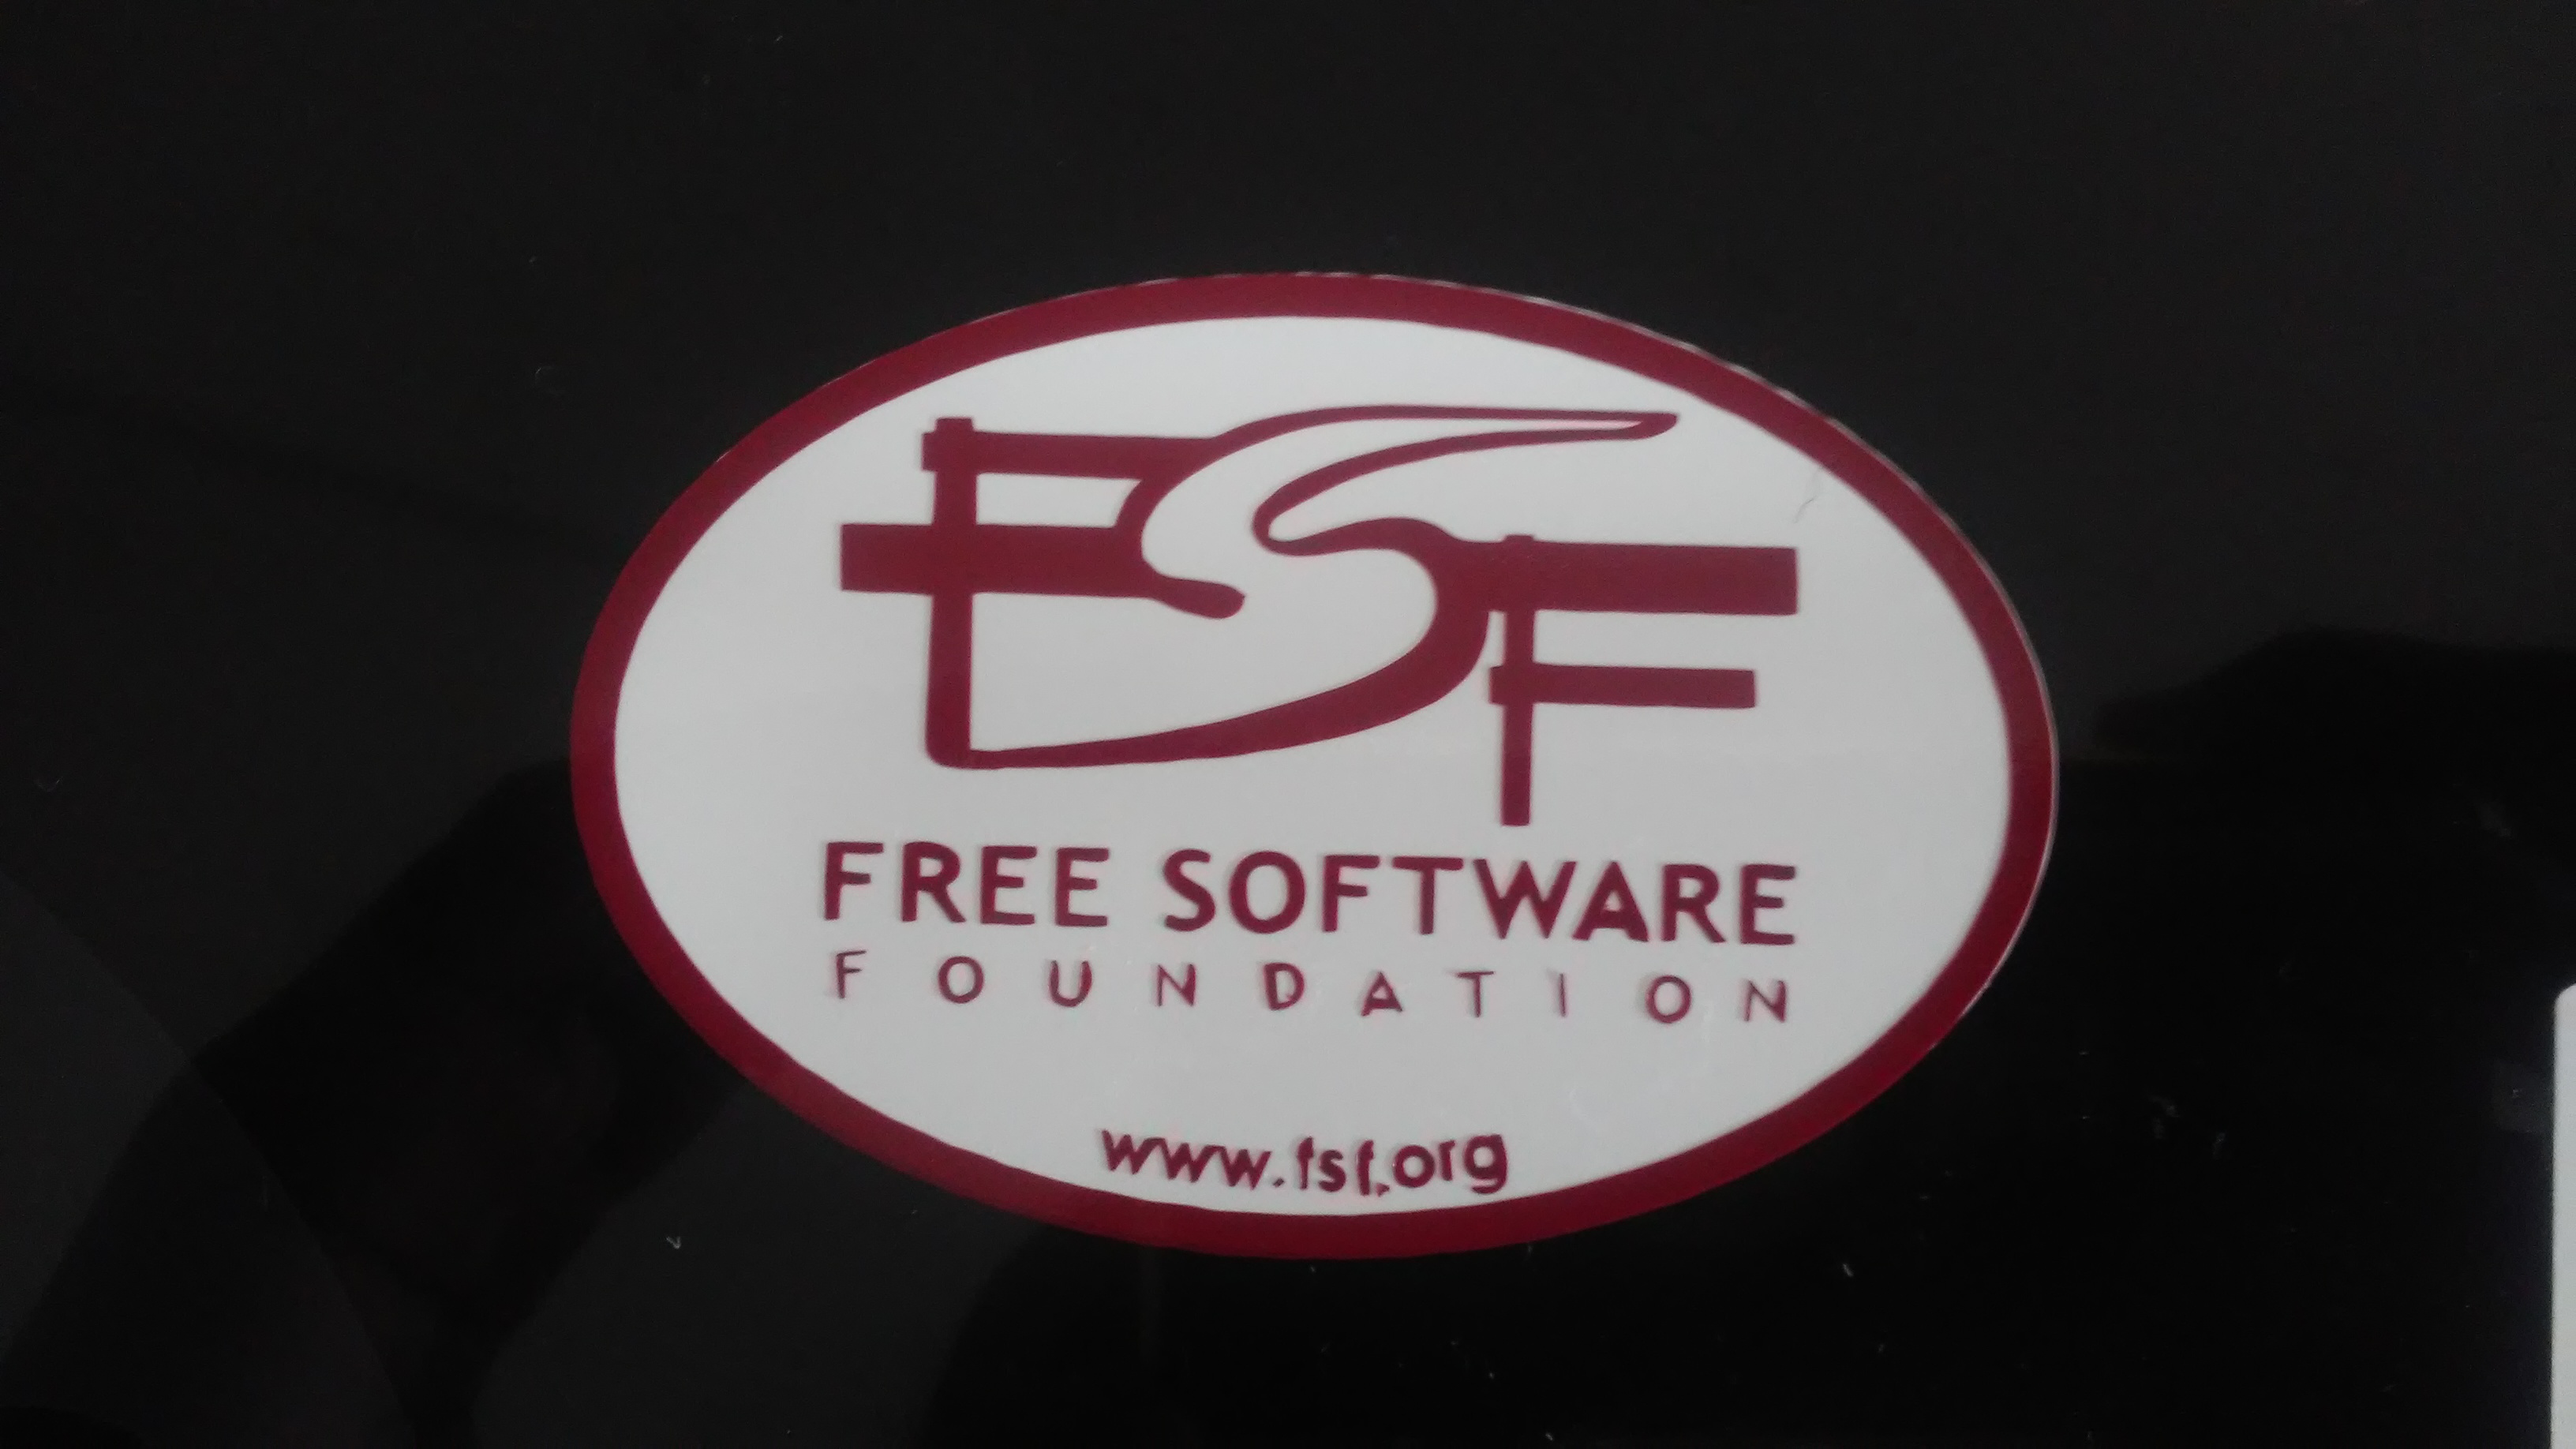 Img: FSF sticker